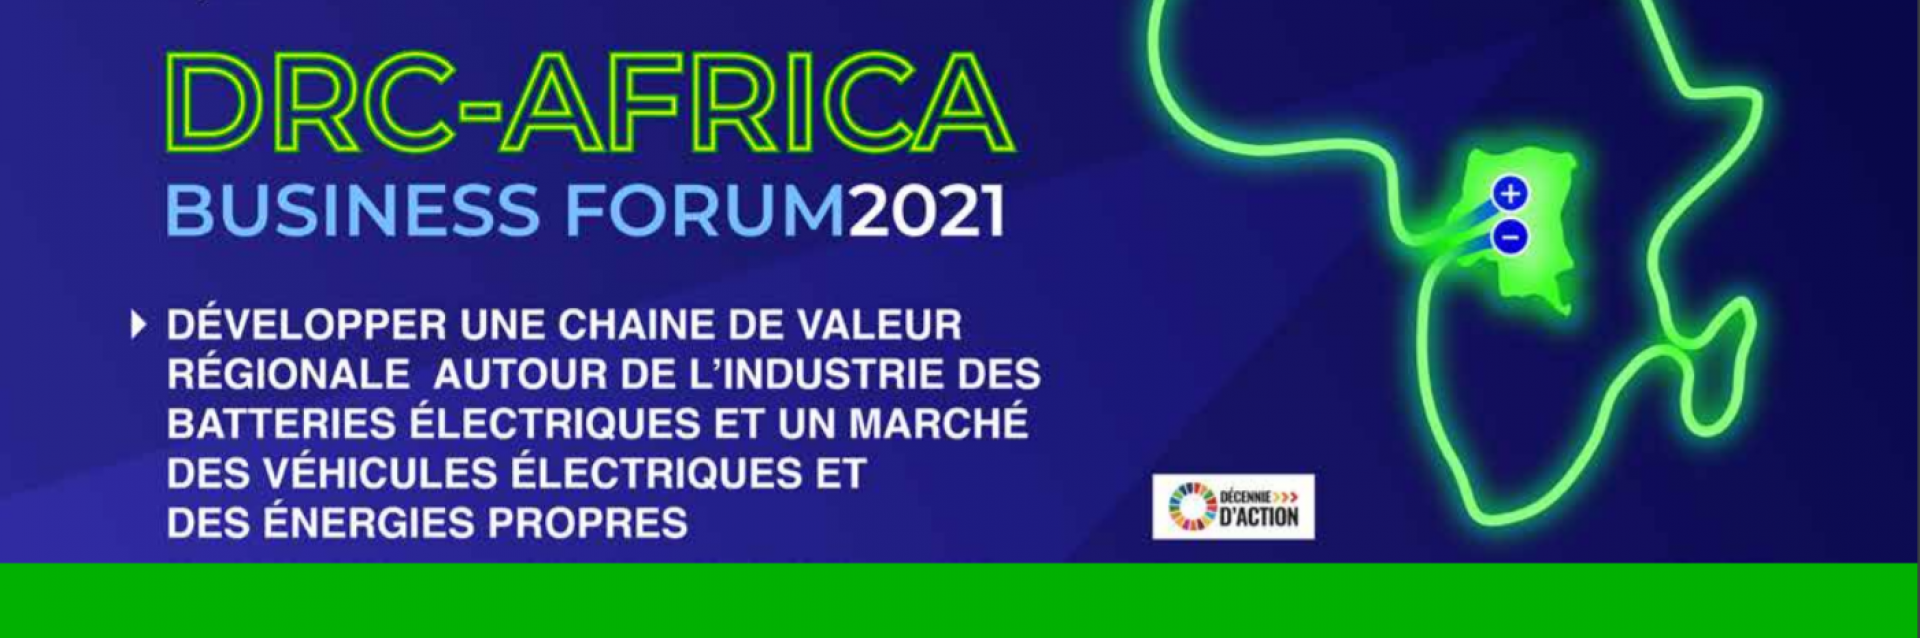 DRC-Africa Business Forum